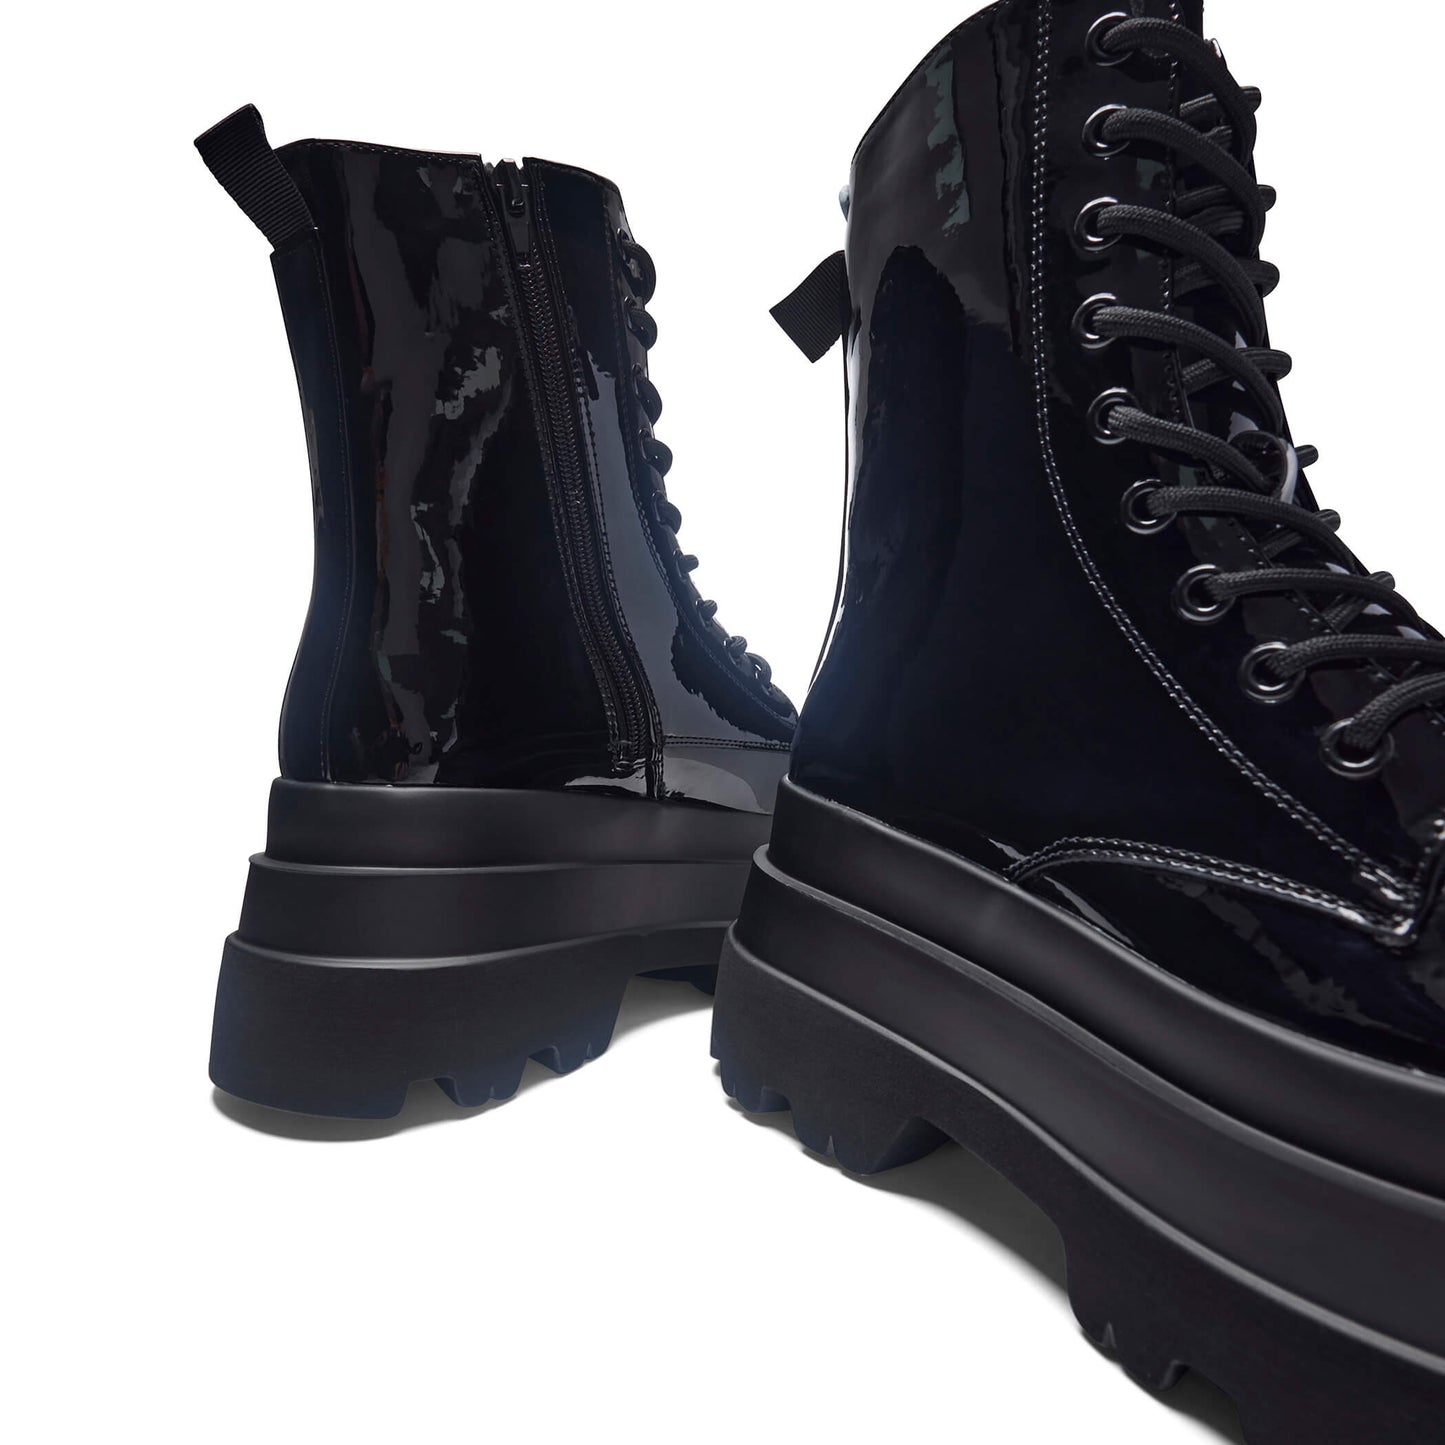 Deathwatch Trident Patent Platform Boots - Ankle Boots - KOI Footwear - Black - Close-Up Detail